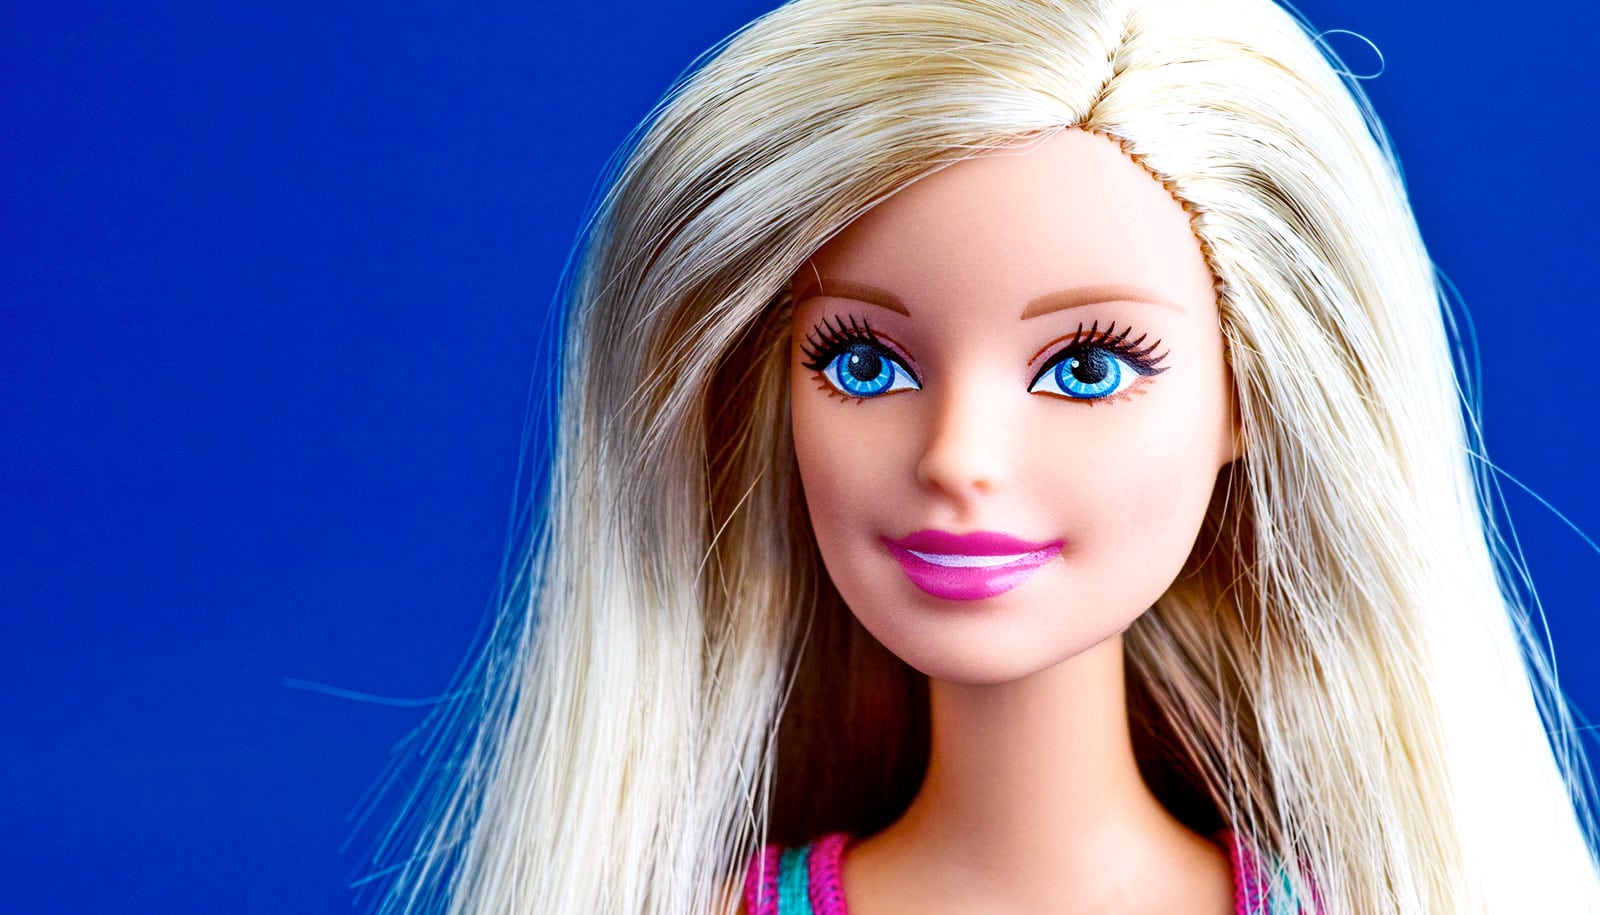 blonde barbie